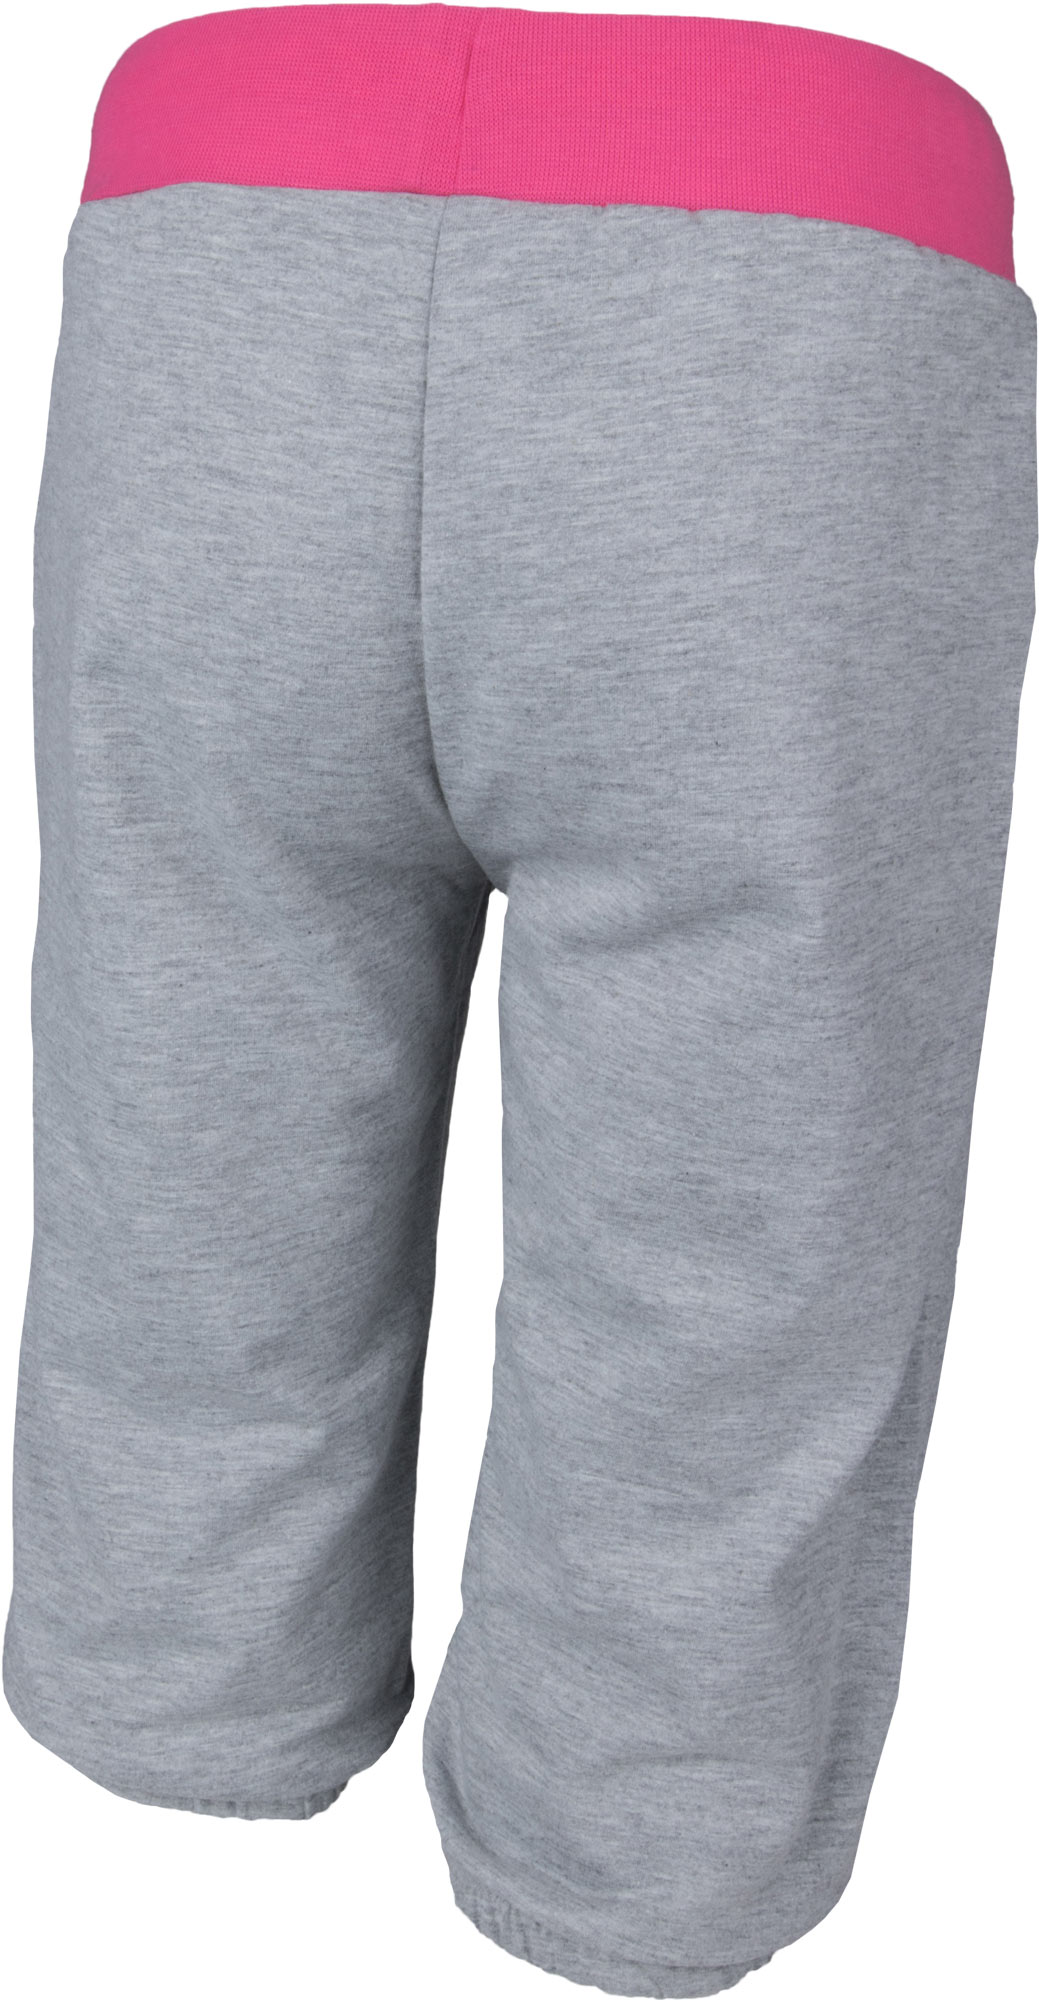 Girls' 3/4 length sweatpants